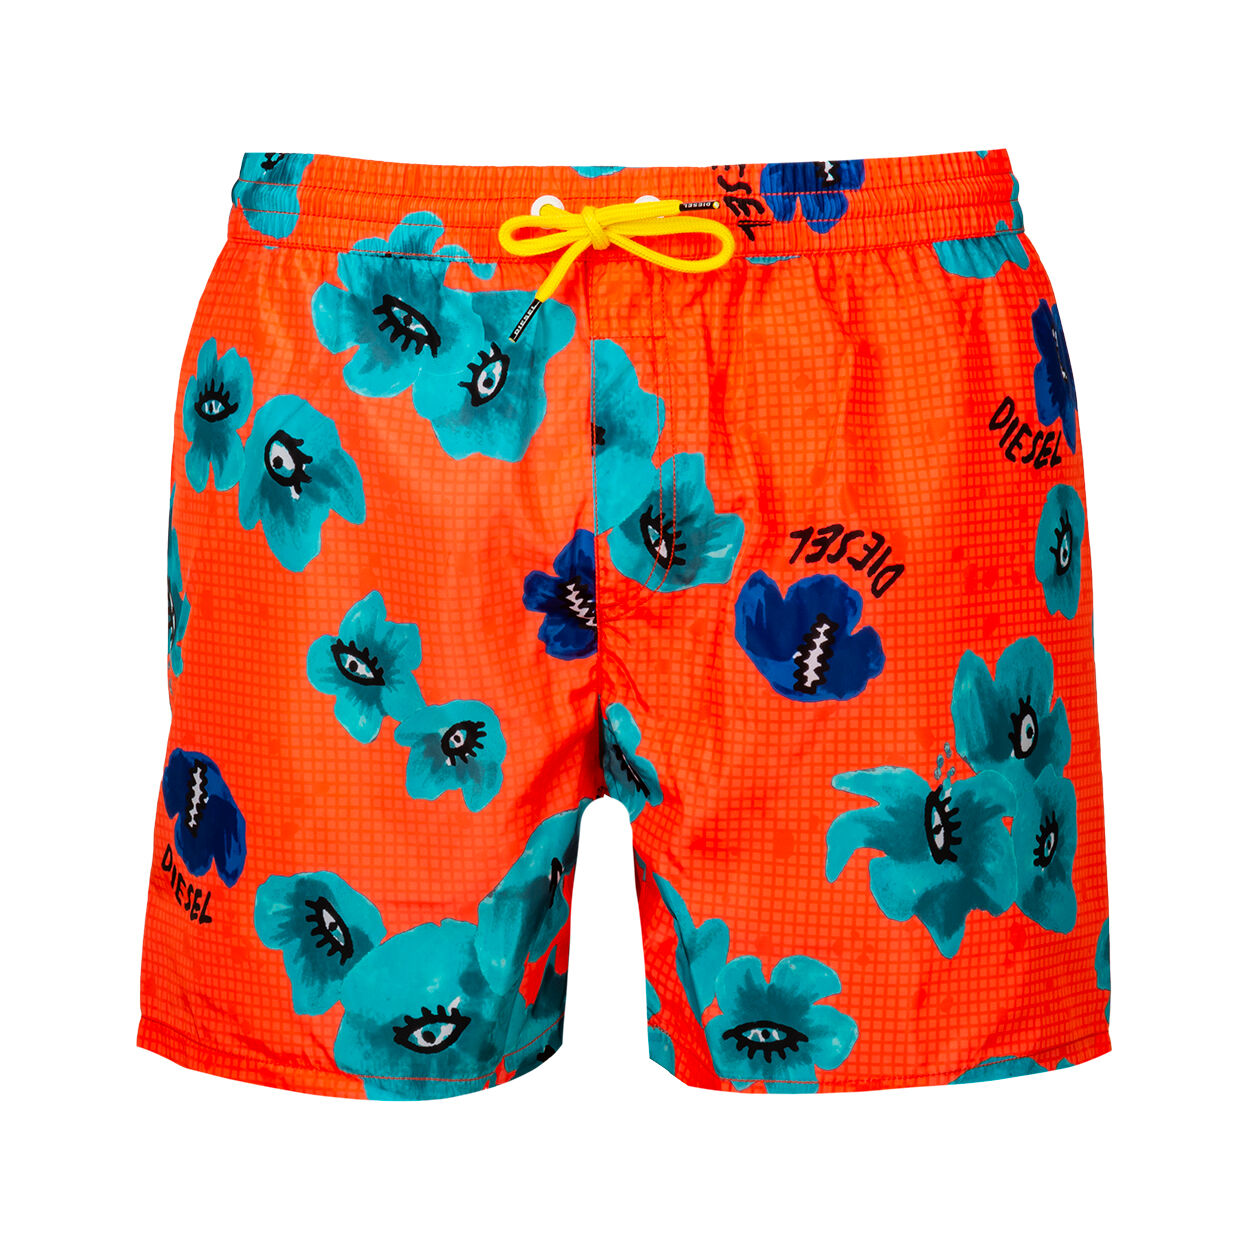 Diesel Underwear Short de bain Diesel Wave orange fluo à motifs fleuris bleu turquoise et bleu marine - ORANGE FLUO - M